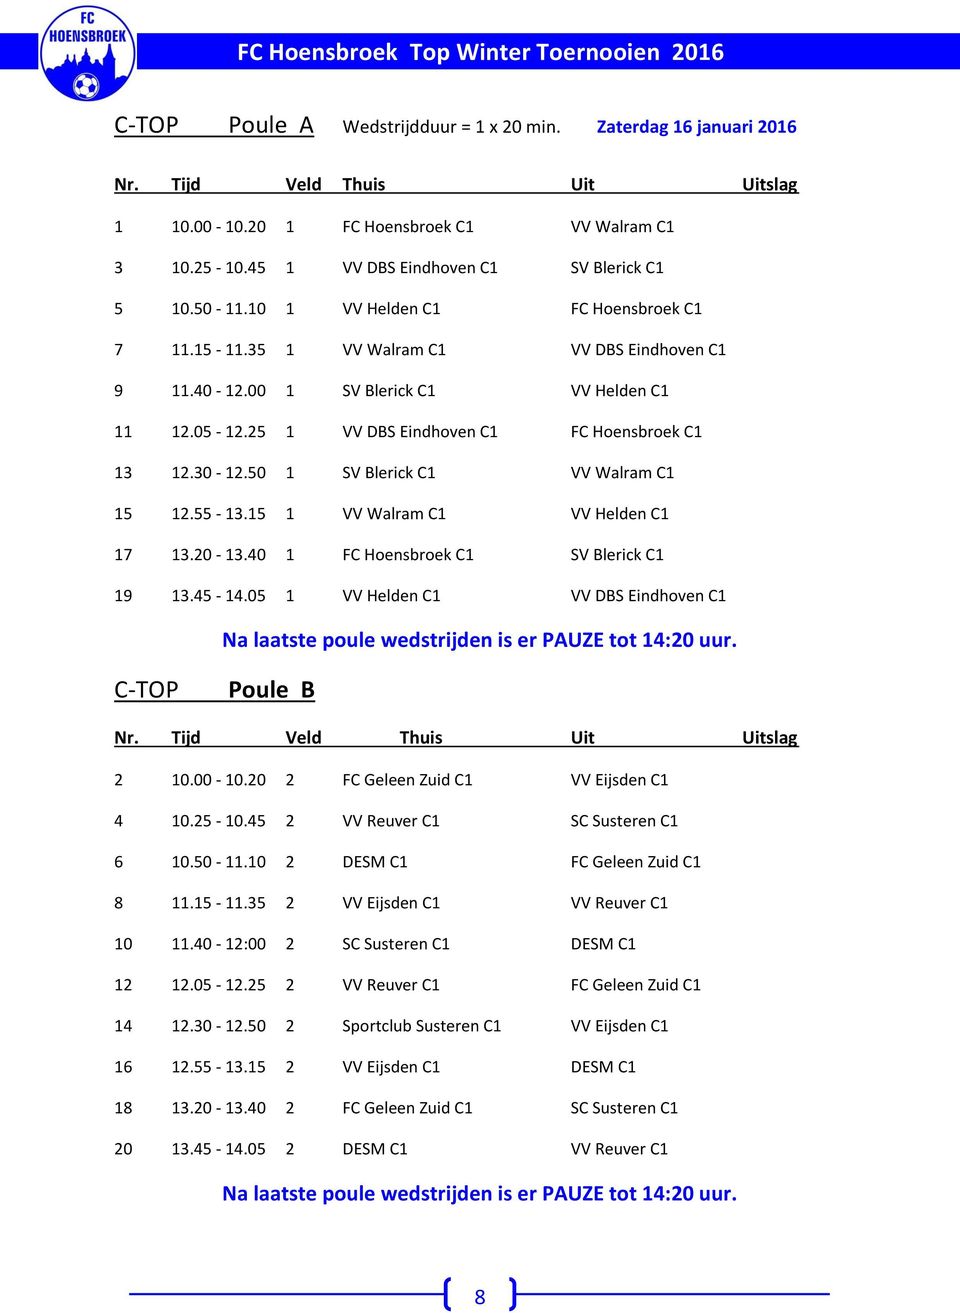 25 1 VV DBS Eindhoven C1 FC Hoensbroek C1 13 12.30-12.50 1 SV Blerick C1 VV alram C1 15 12.55-13.15 1 VV alram C1 VV Helden C1 17 13.20-13.40 1 FC Hoensbroek C1 SV Blerick C1 19 13.45-14.